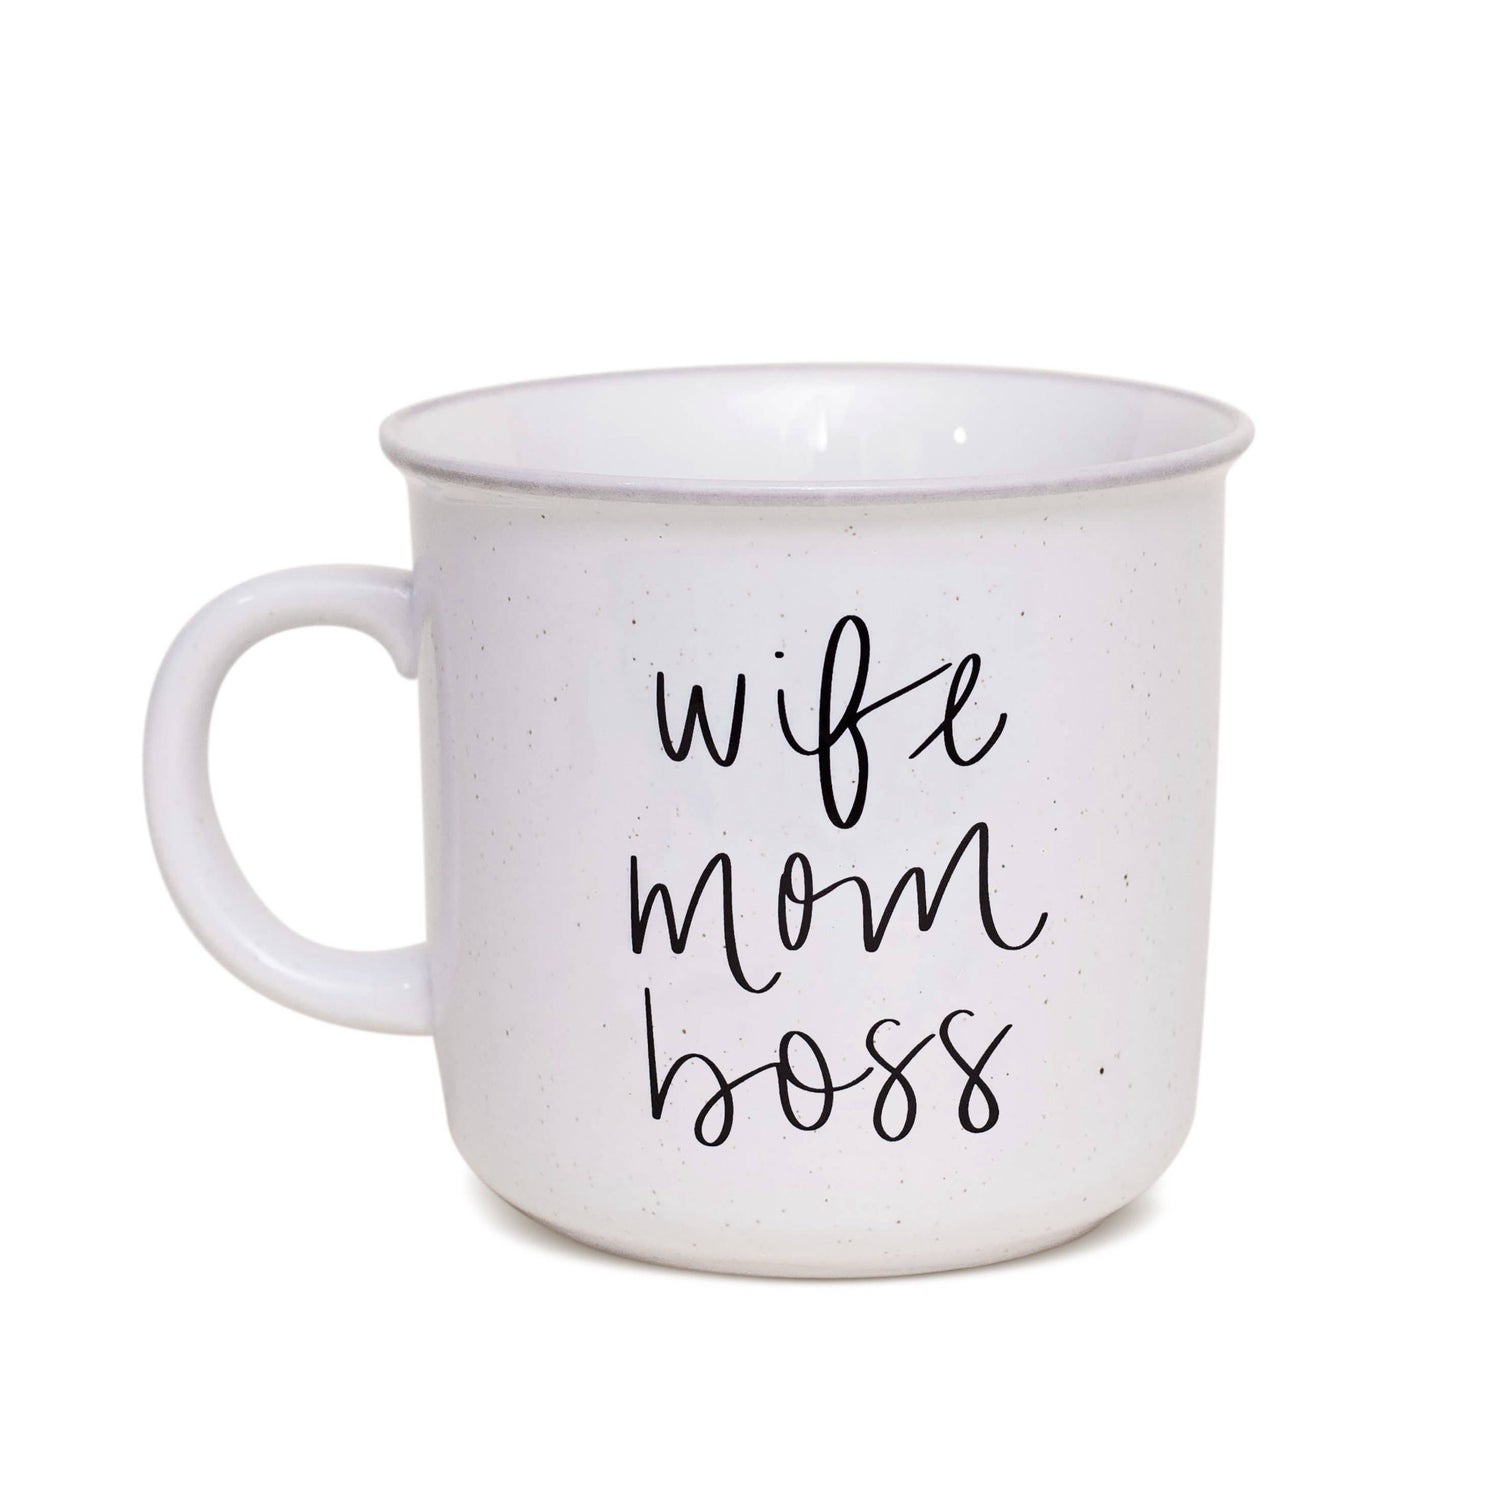 Wife Mom Boss - Rustic Campfire Coffee Mug - 16 oz